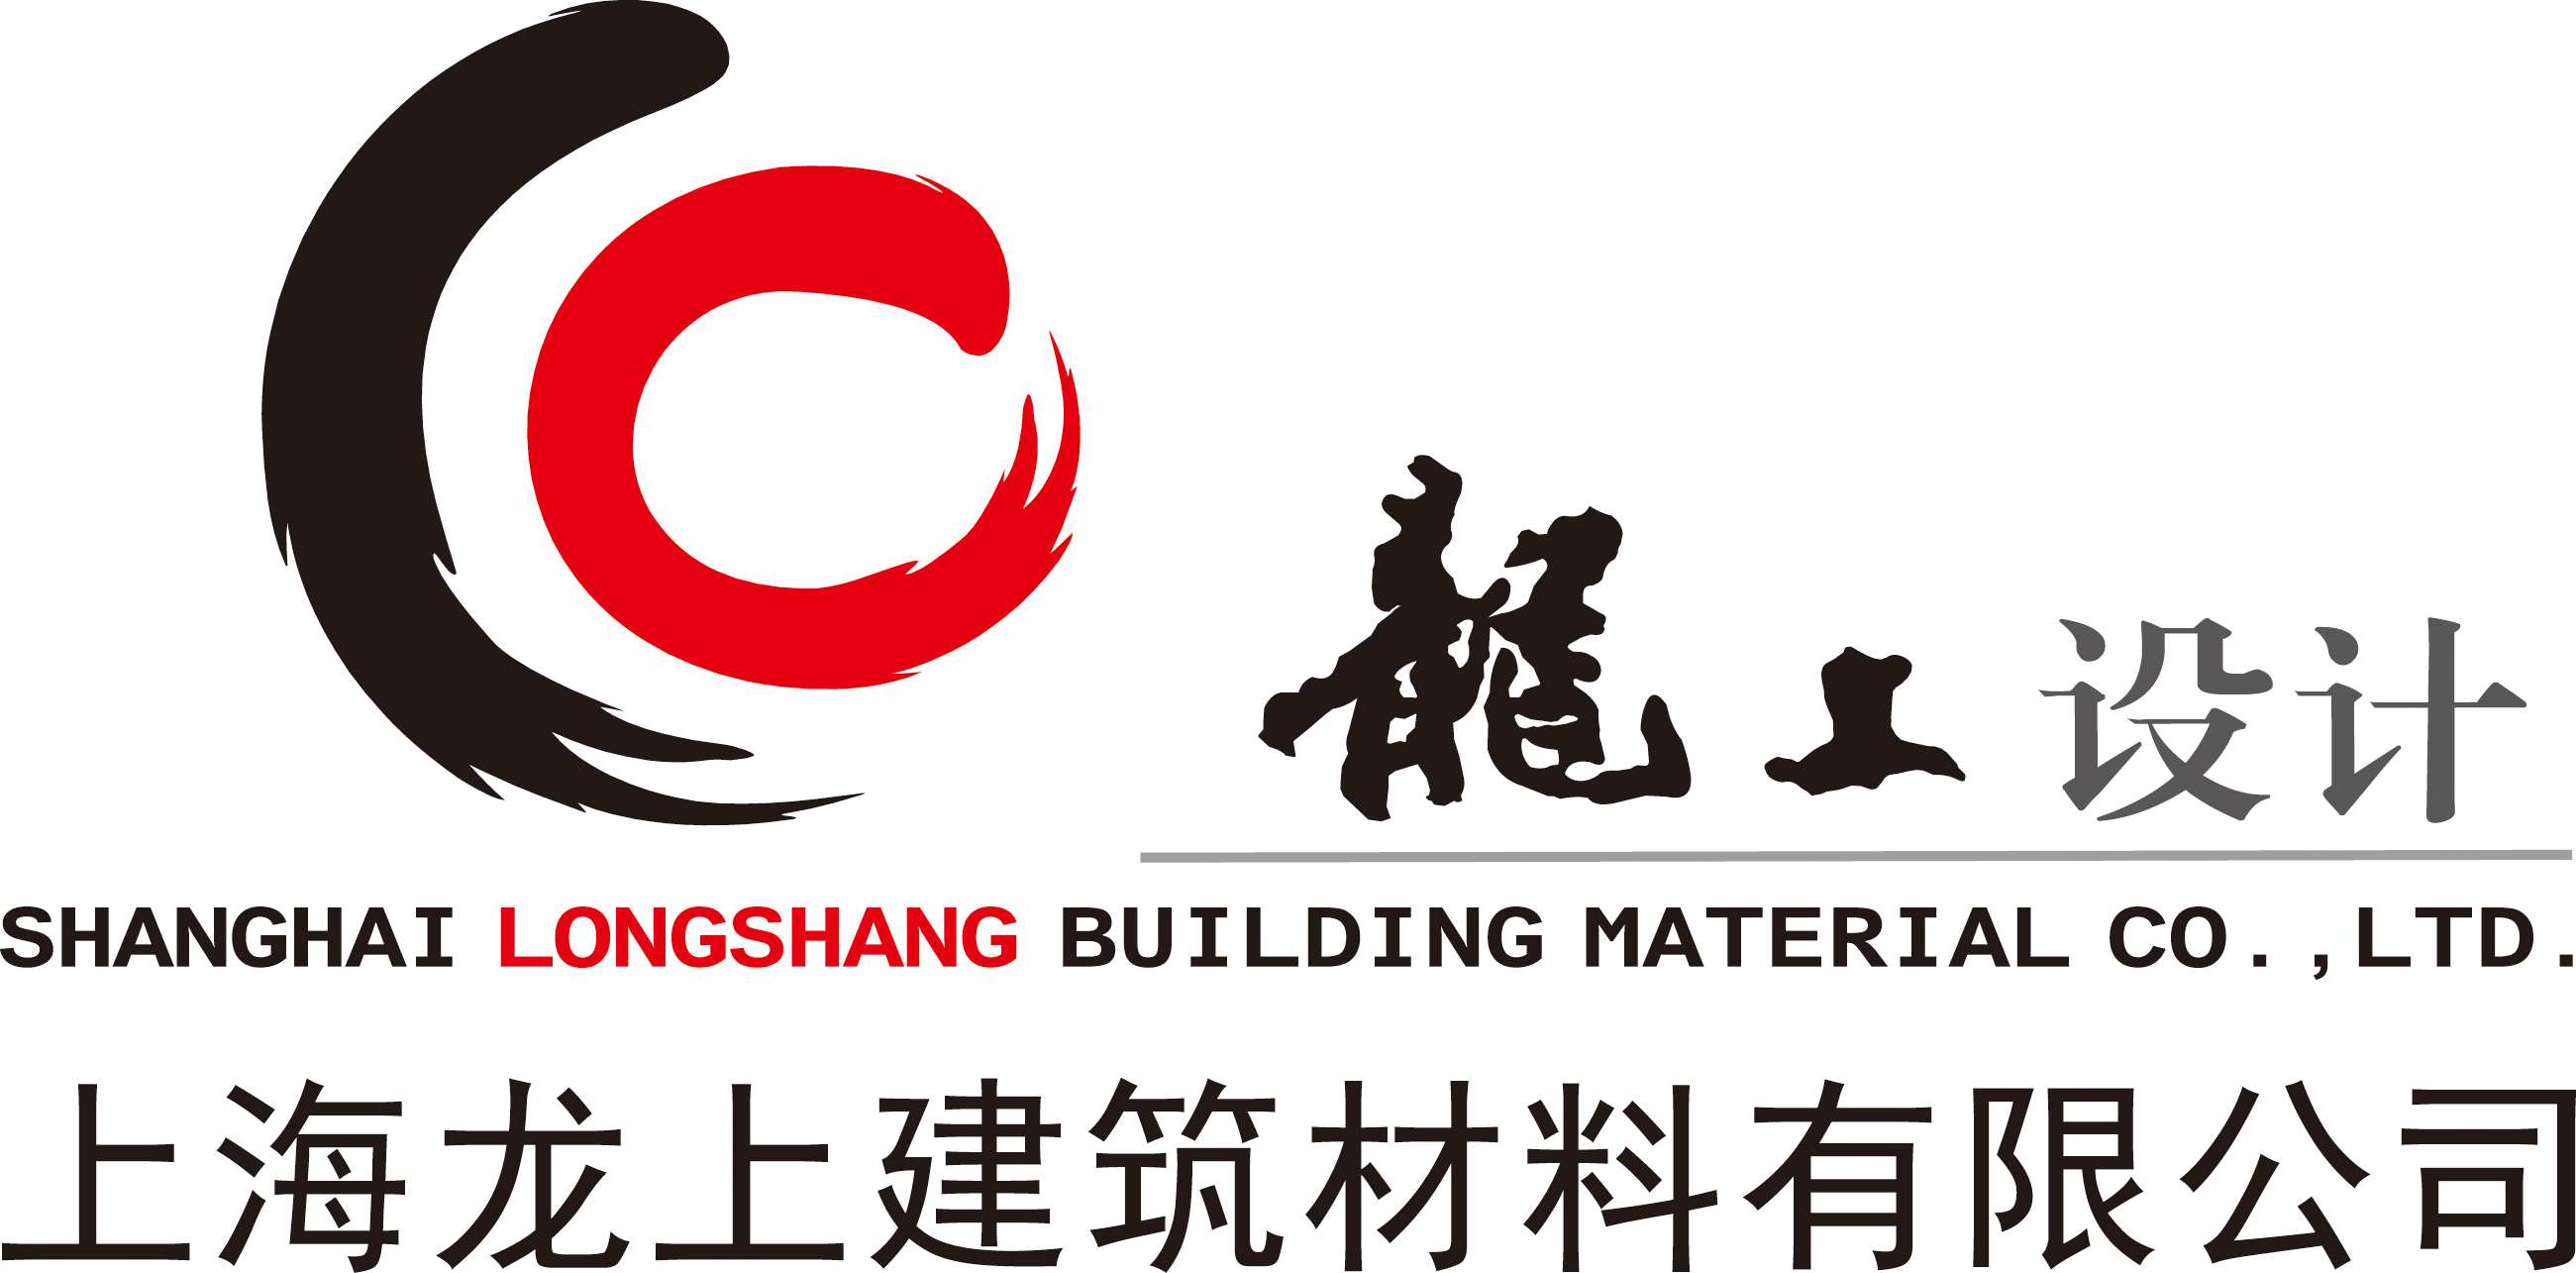 SHANGHAI LONGSUN BUILDING MATERIAL CO., LTD.